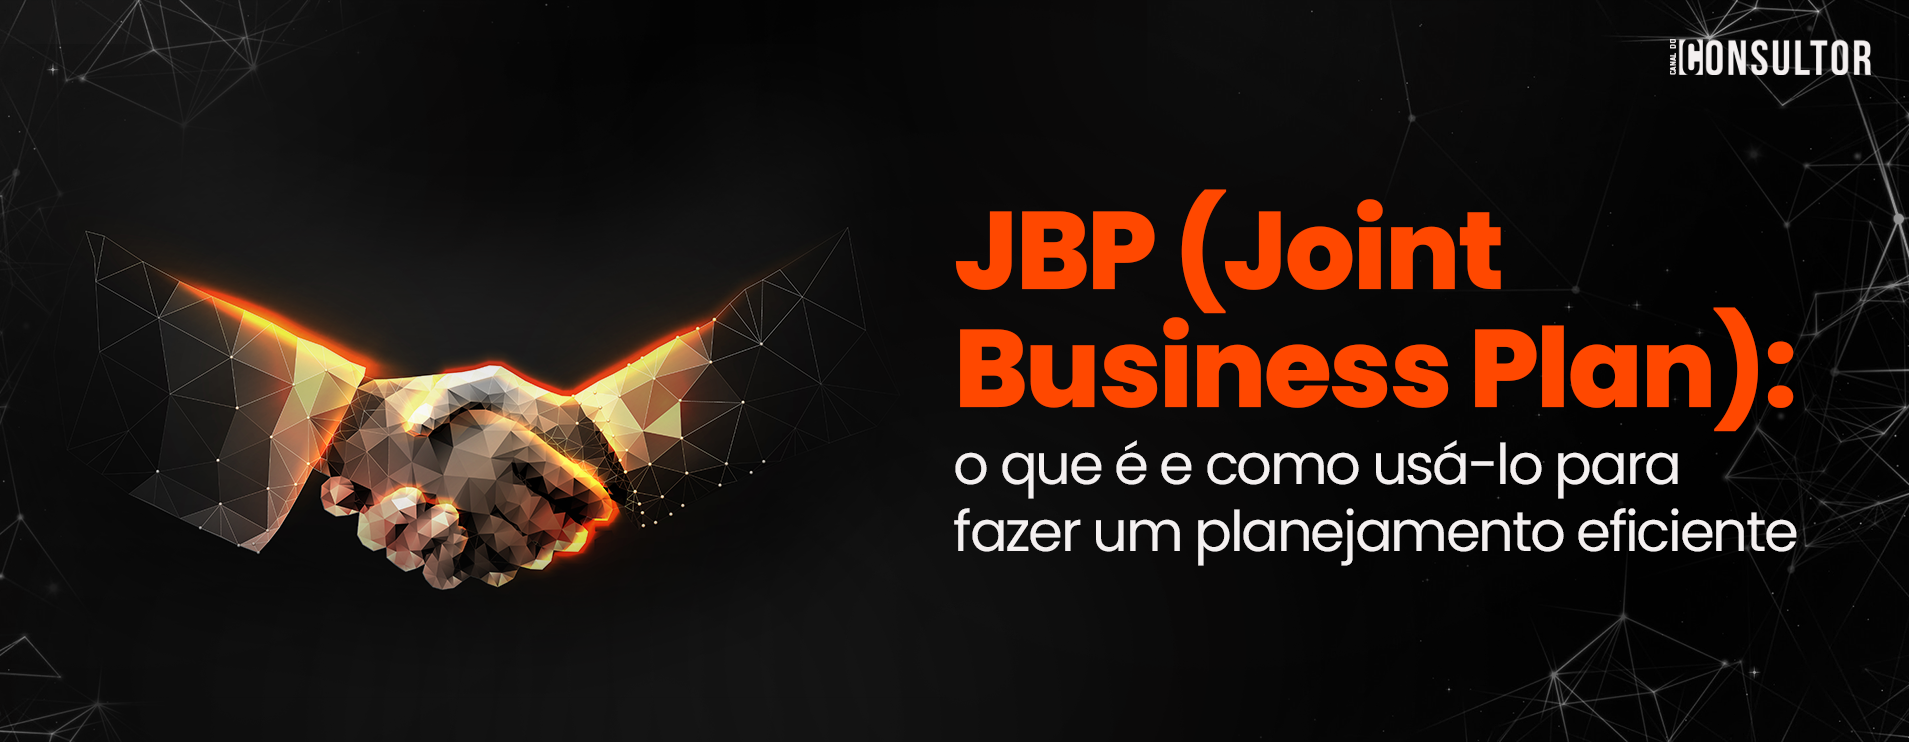 jbp joint business plan